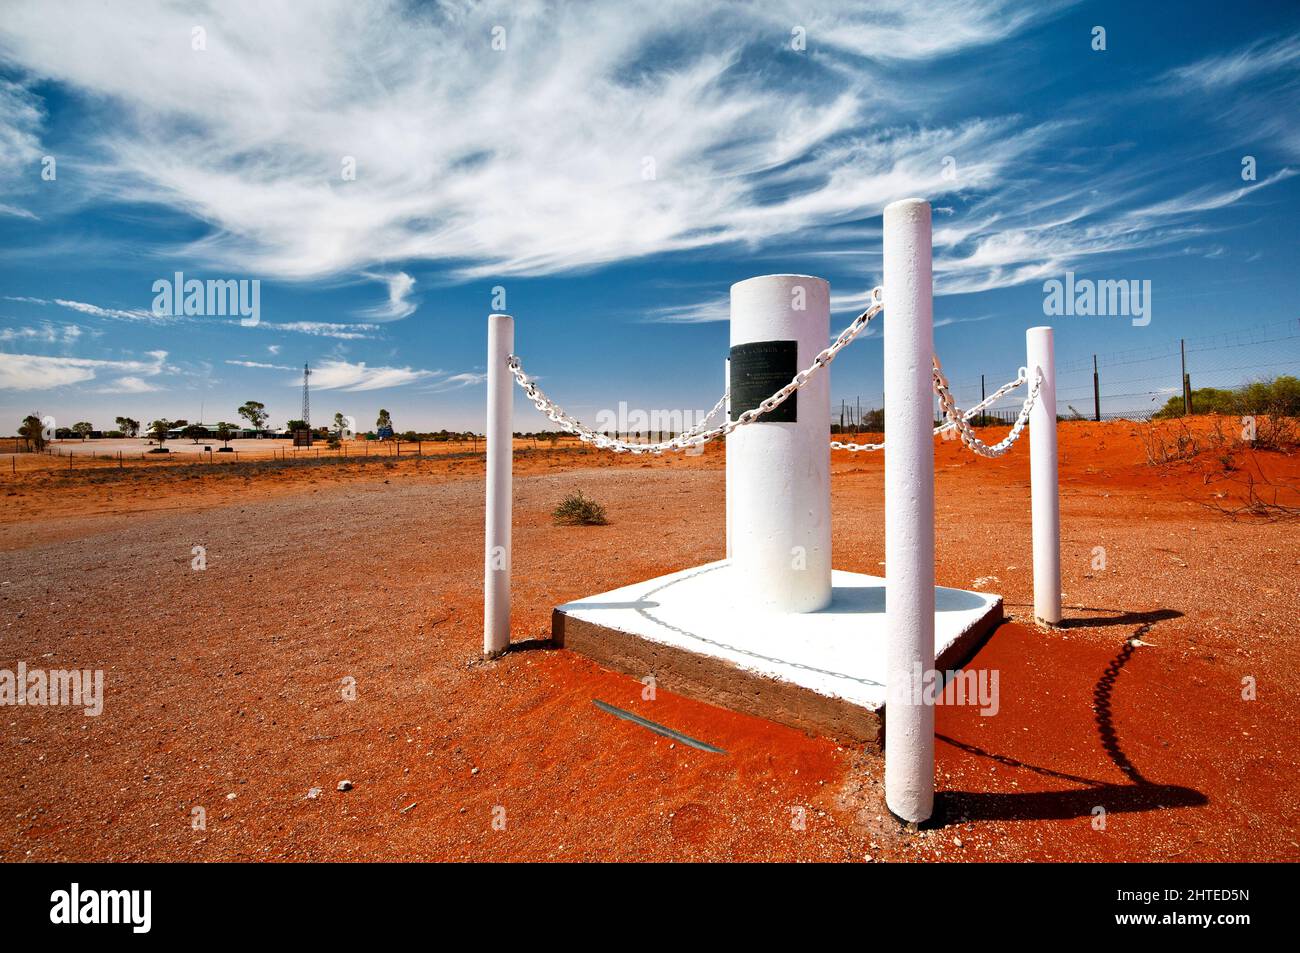 Historical marker at Cameron Corner i Australia's Outback. Stock Photo